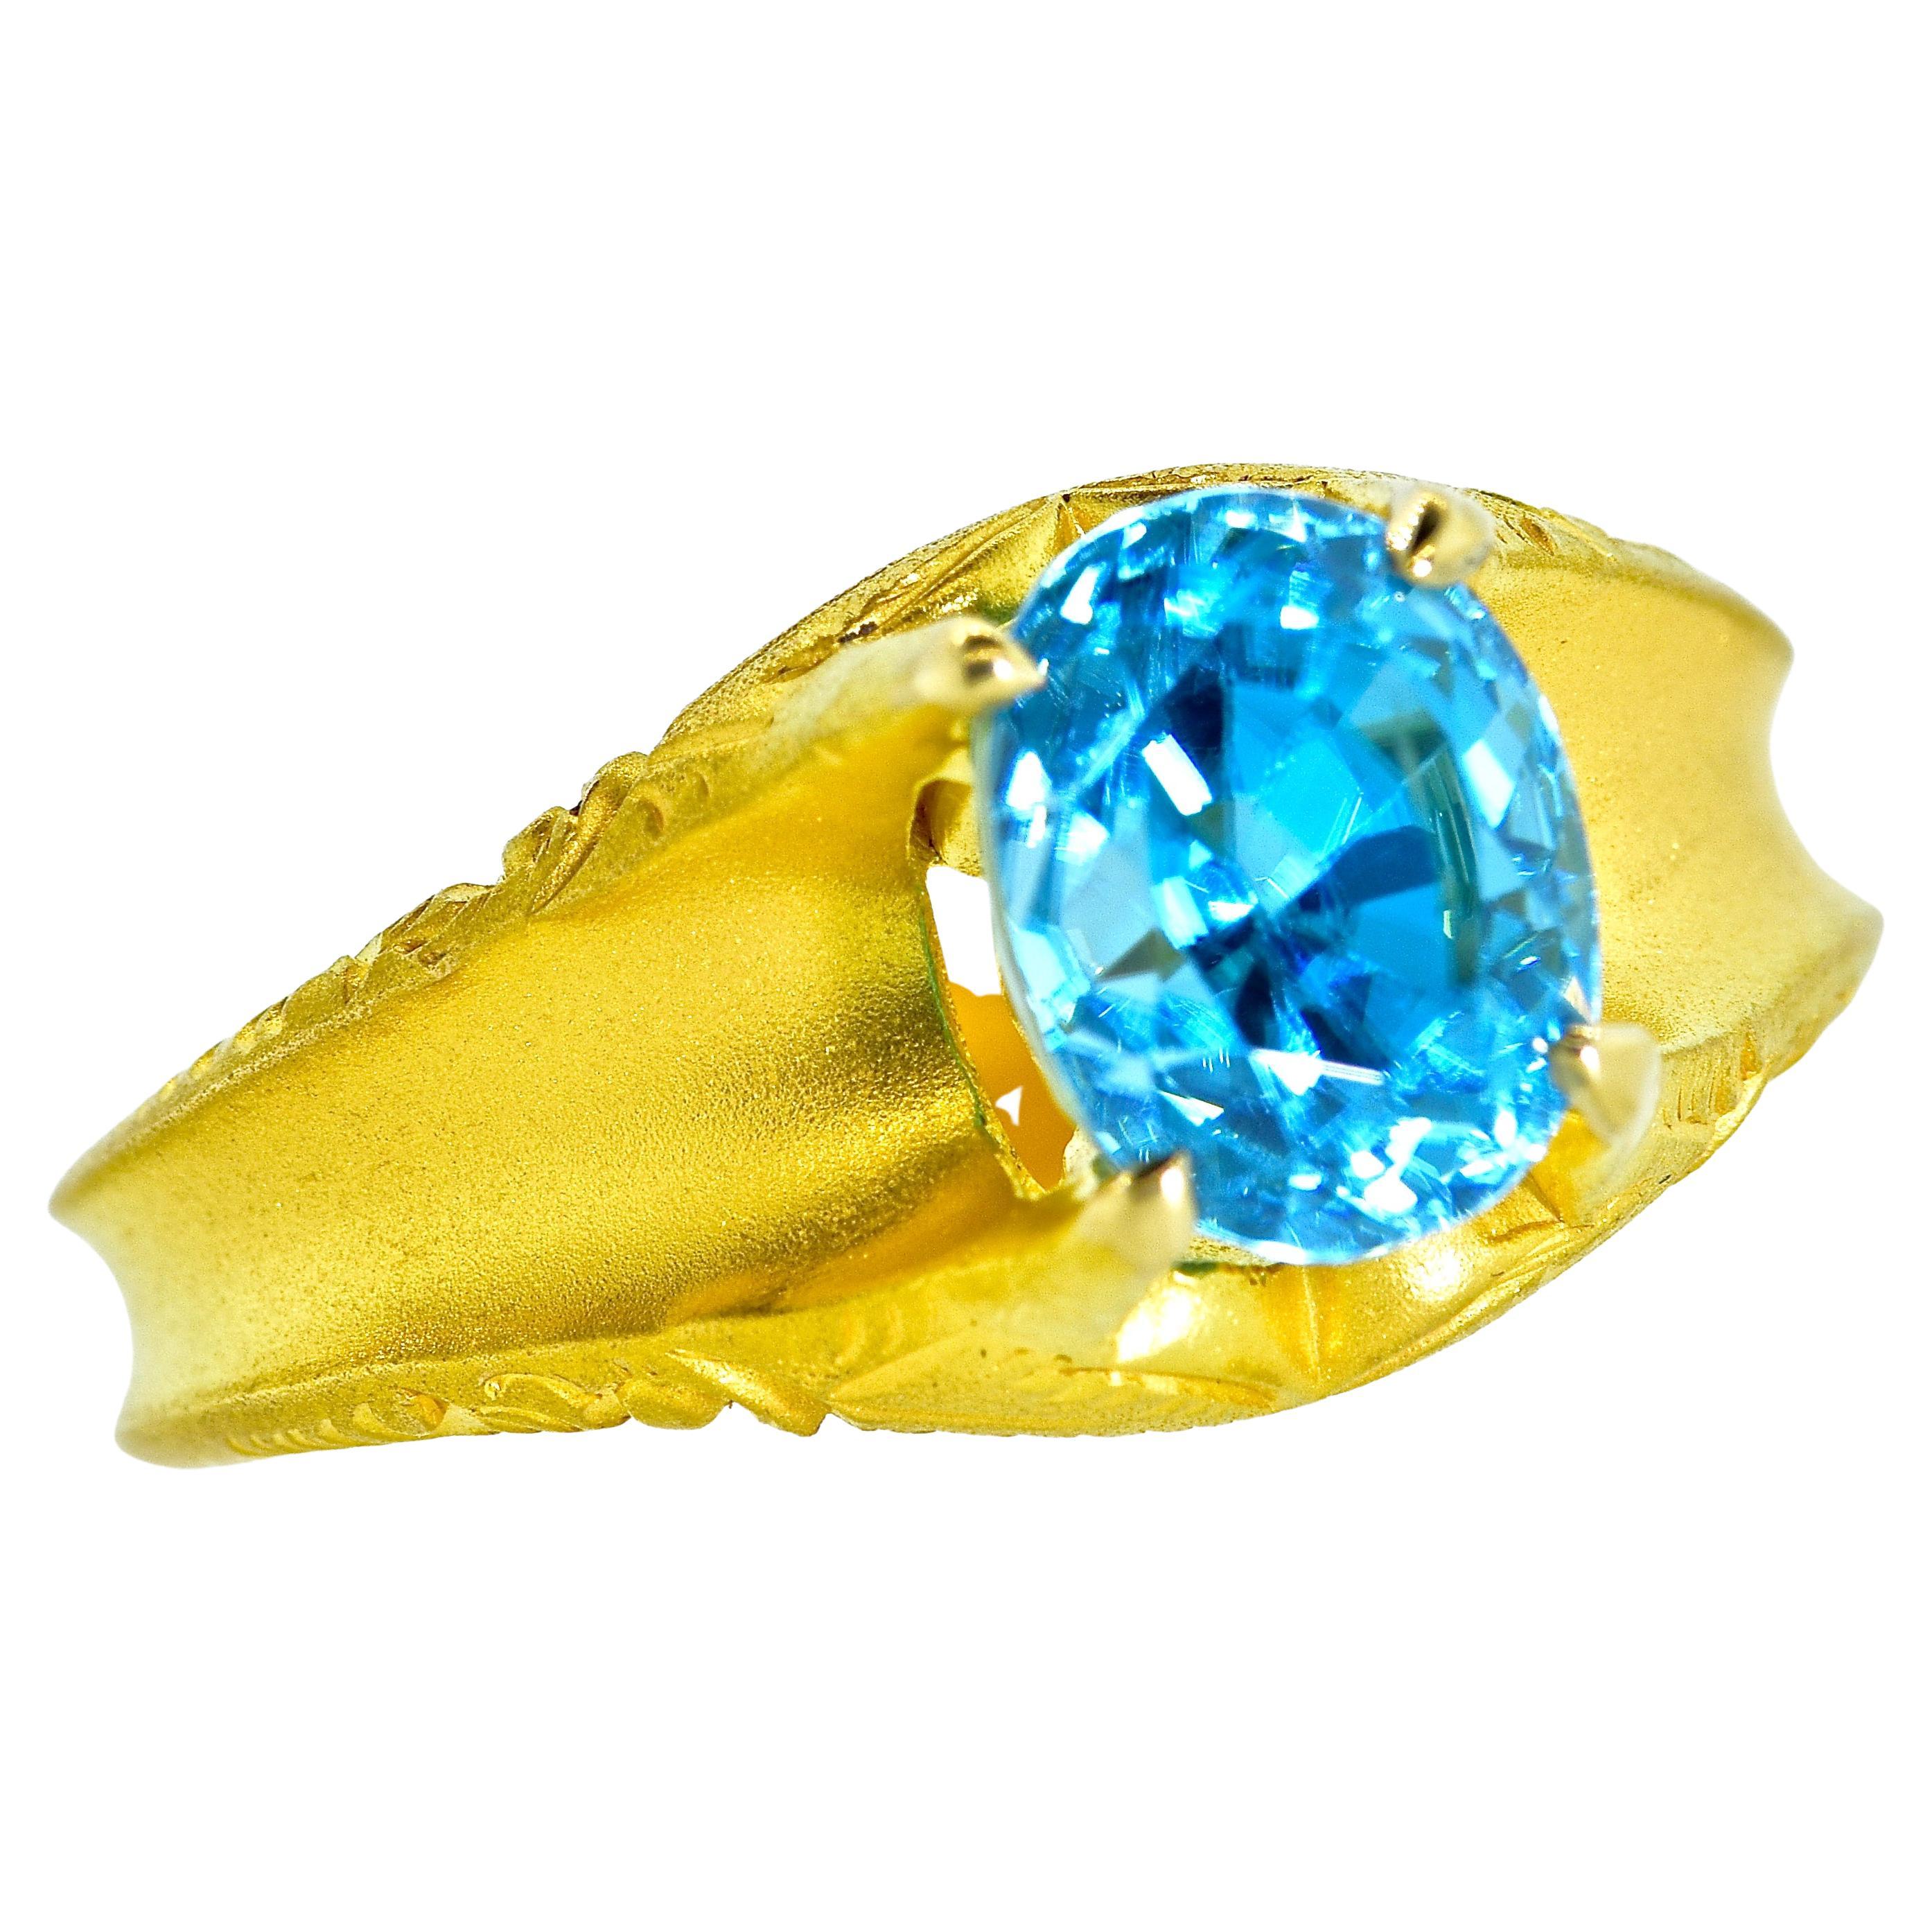 Brilliant Cut Antique Ring 18K Centering a Natural Very Fine Blue Zircon, circa 1890 For Sale